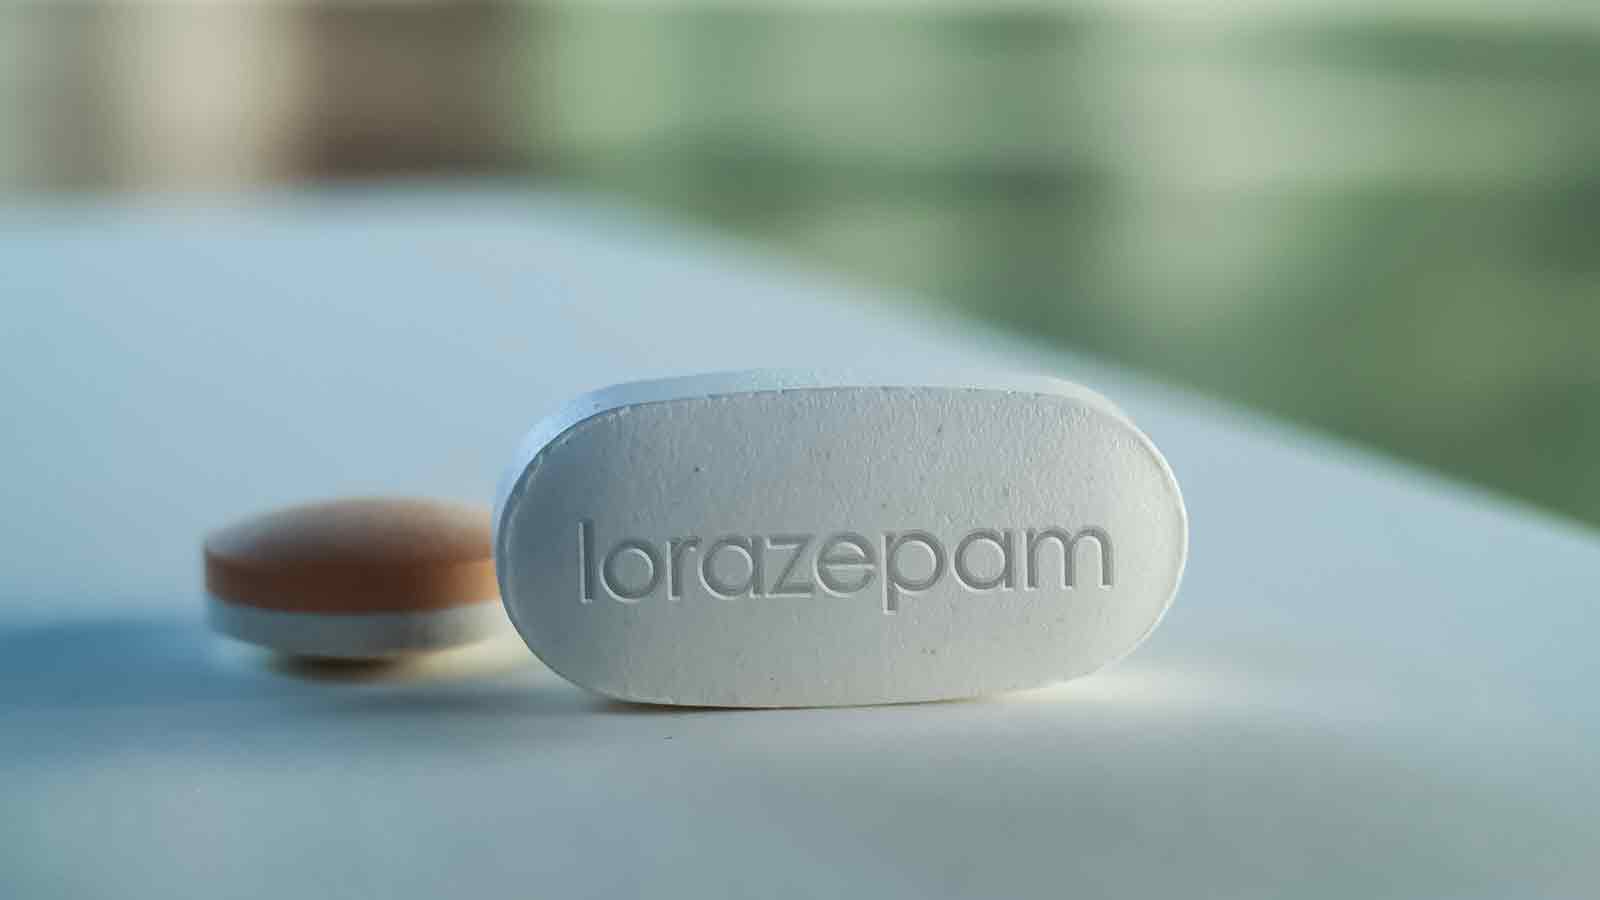 benzodiazepine abuse